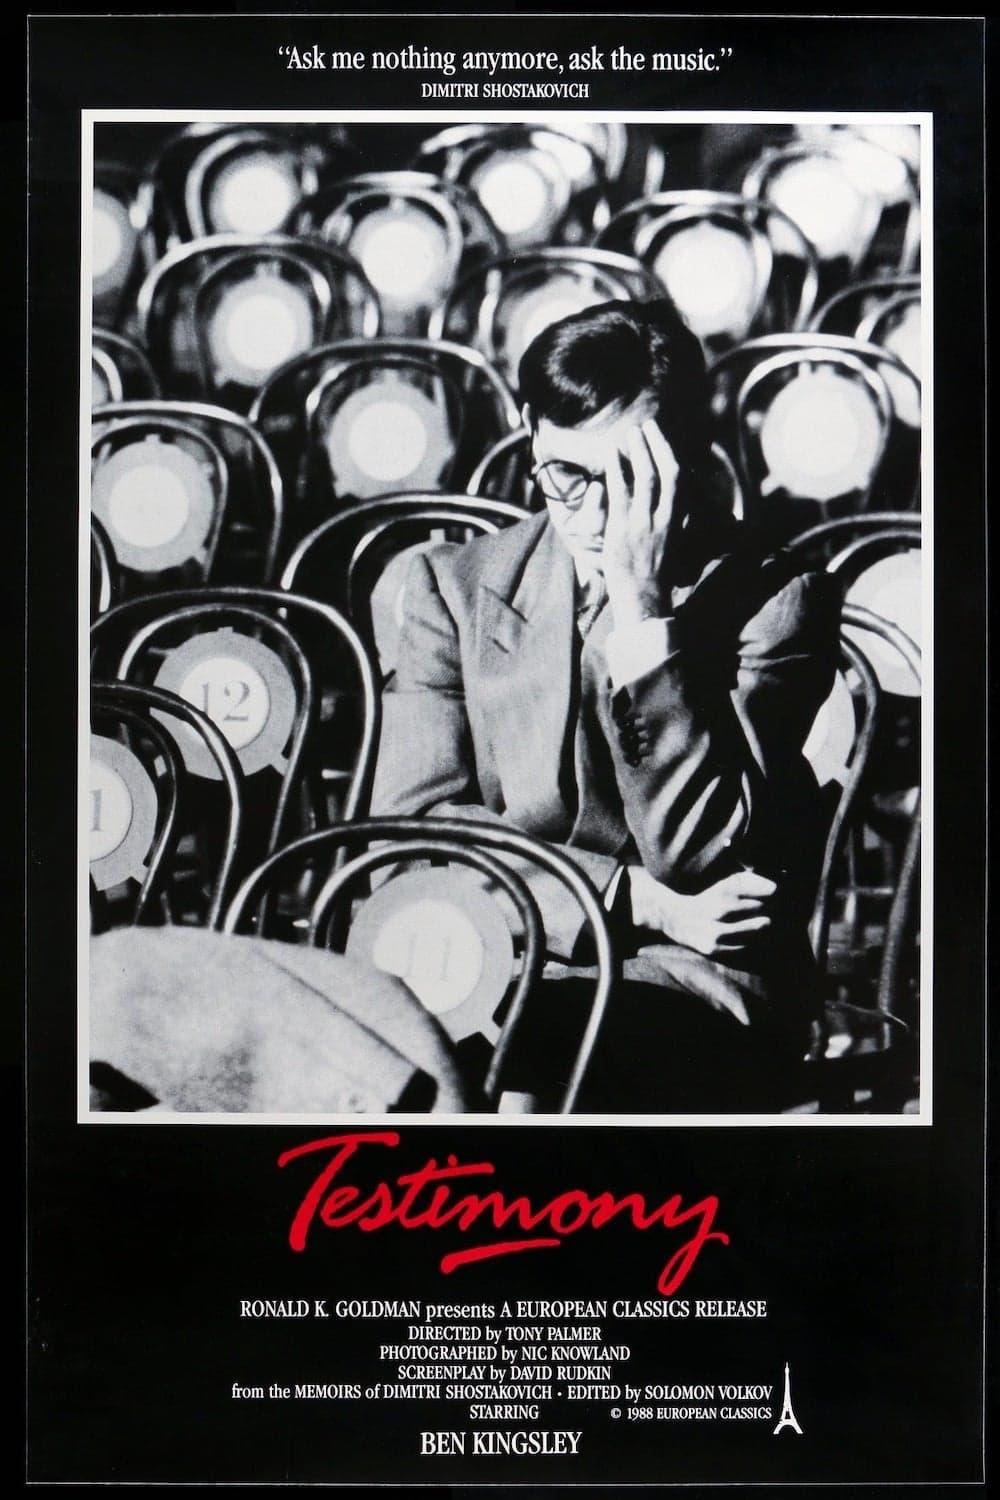 Testimony poster